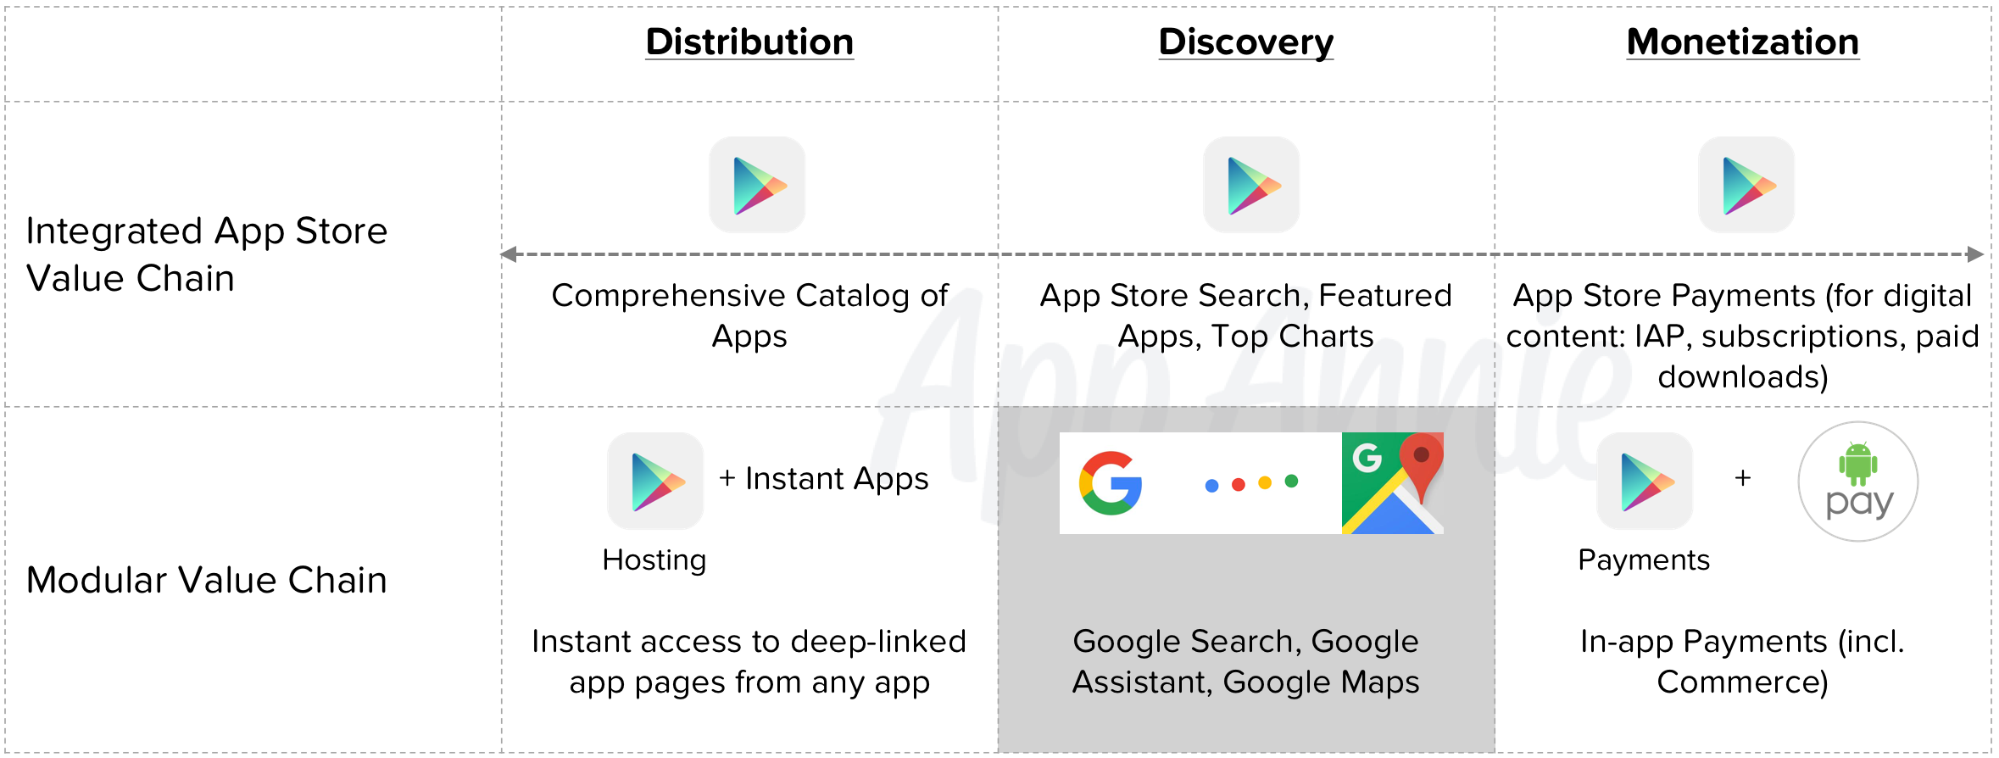 app-distribution-discovery-monetization